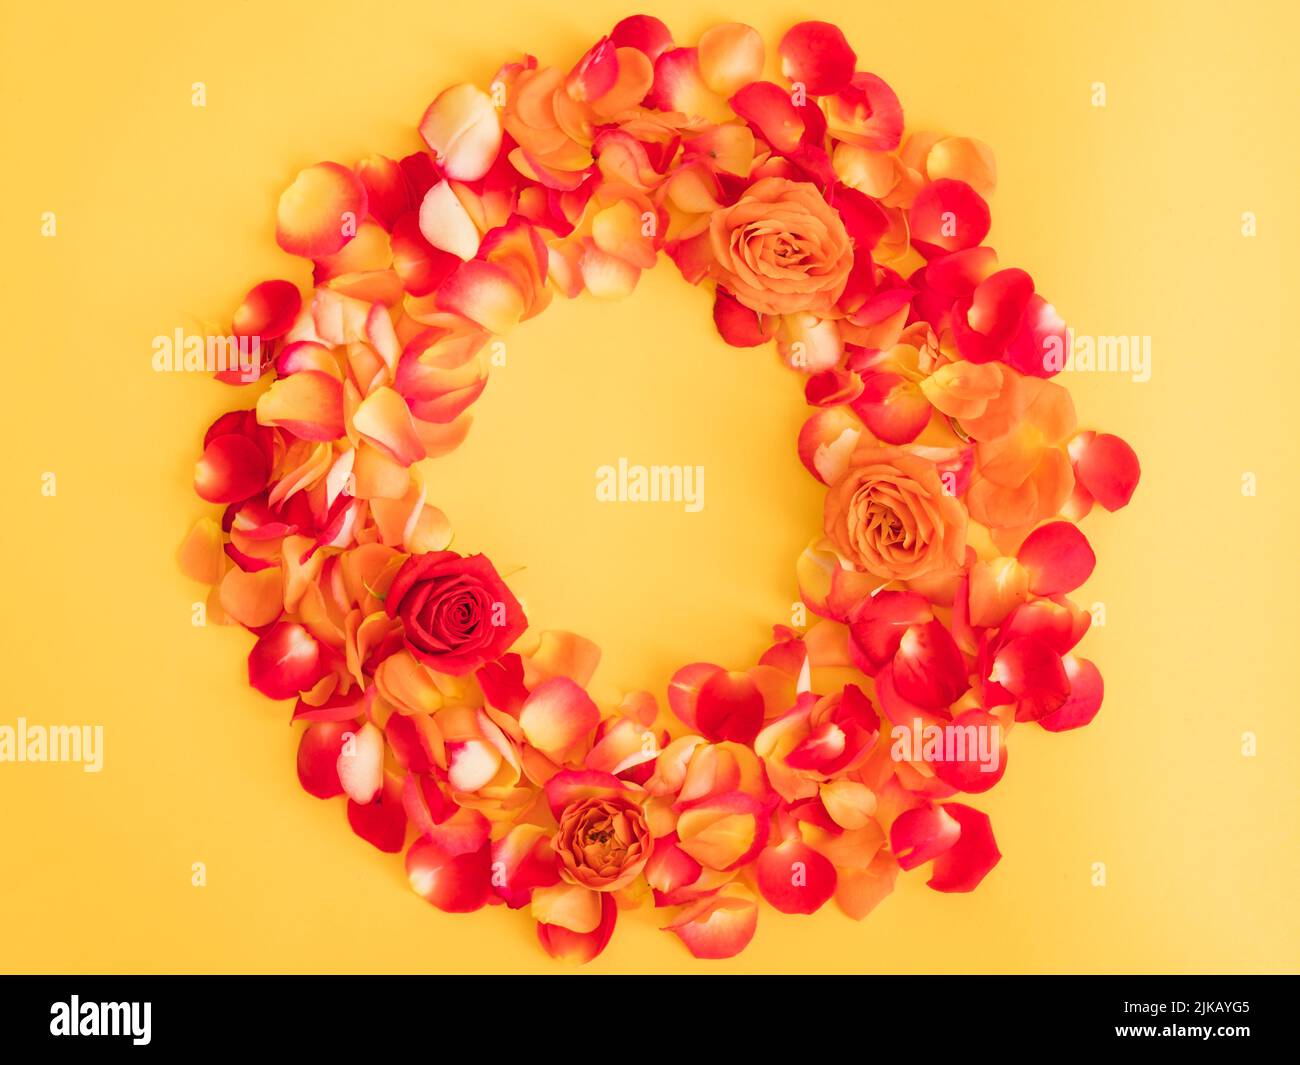 floreale corona petali rosa cornice sfondo arancione Foto Stock